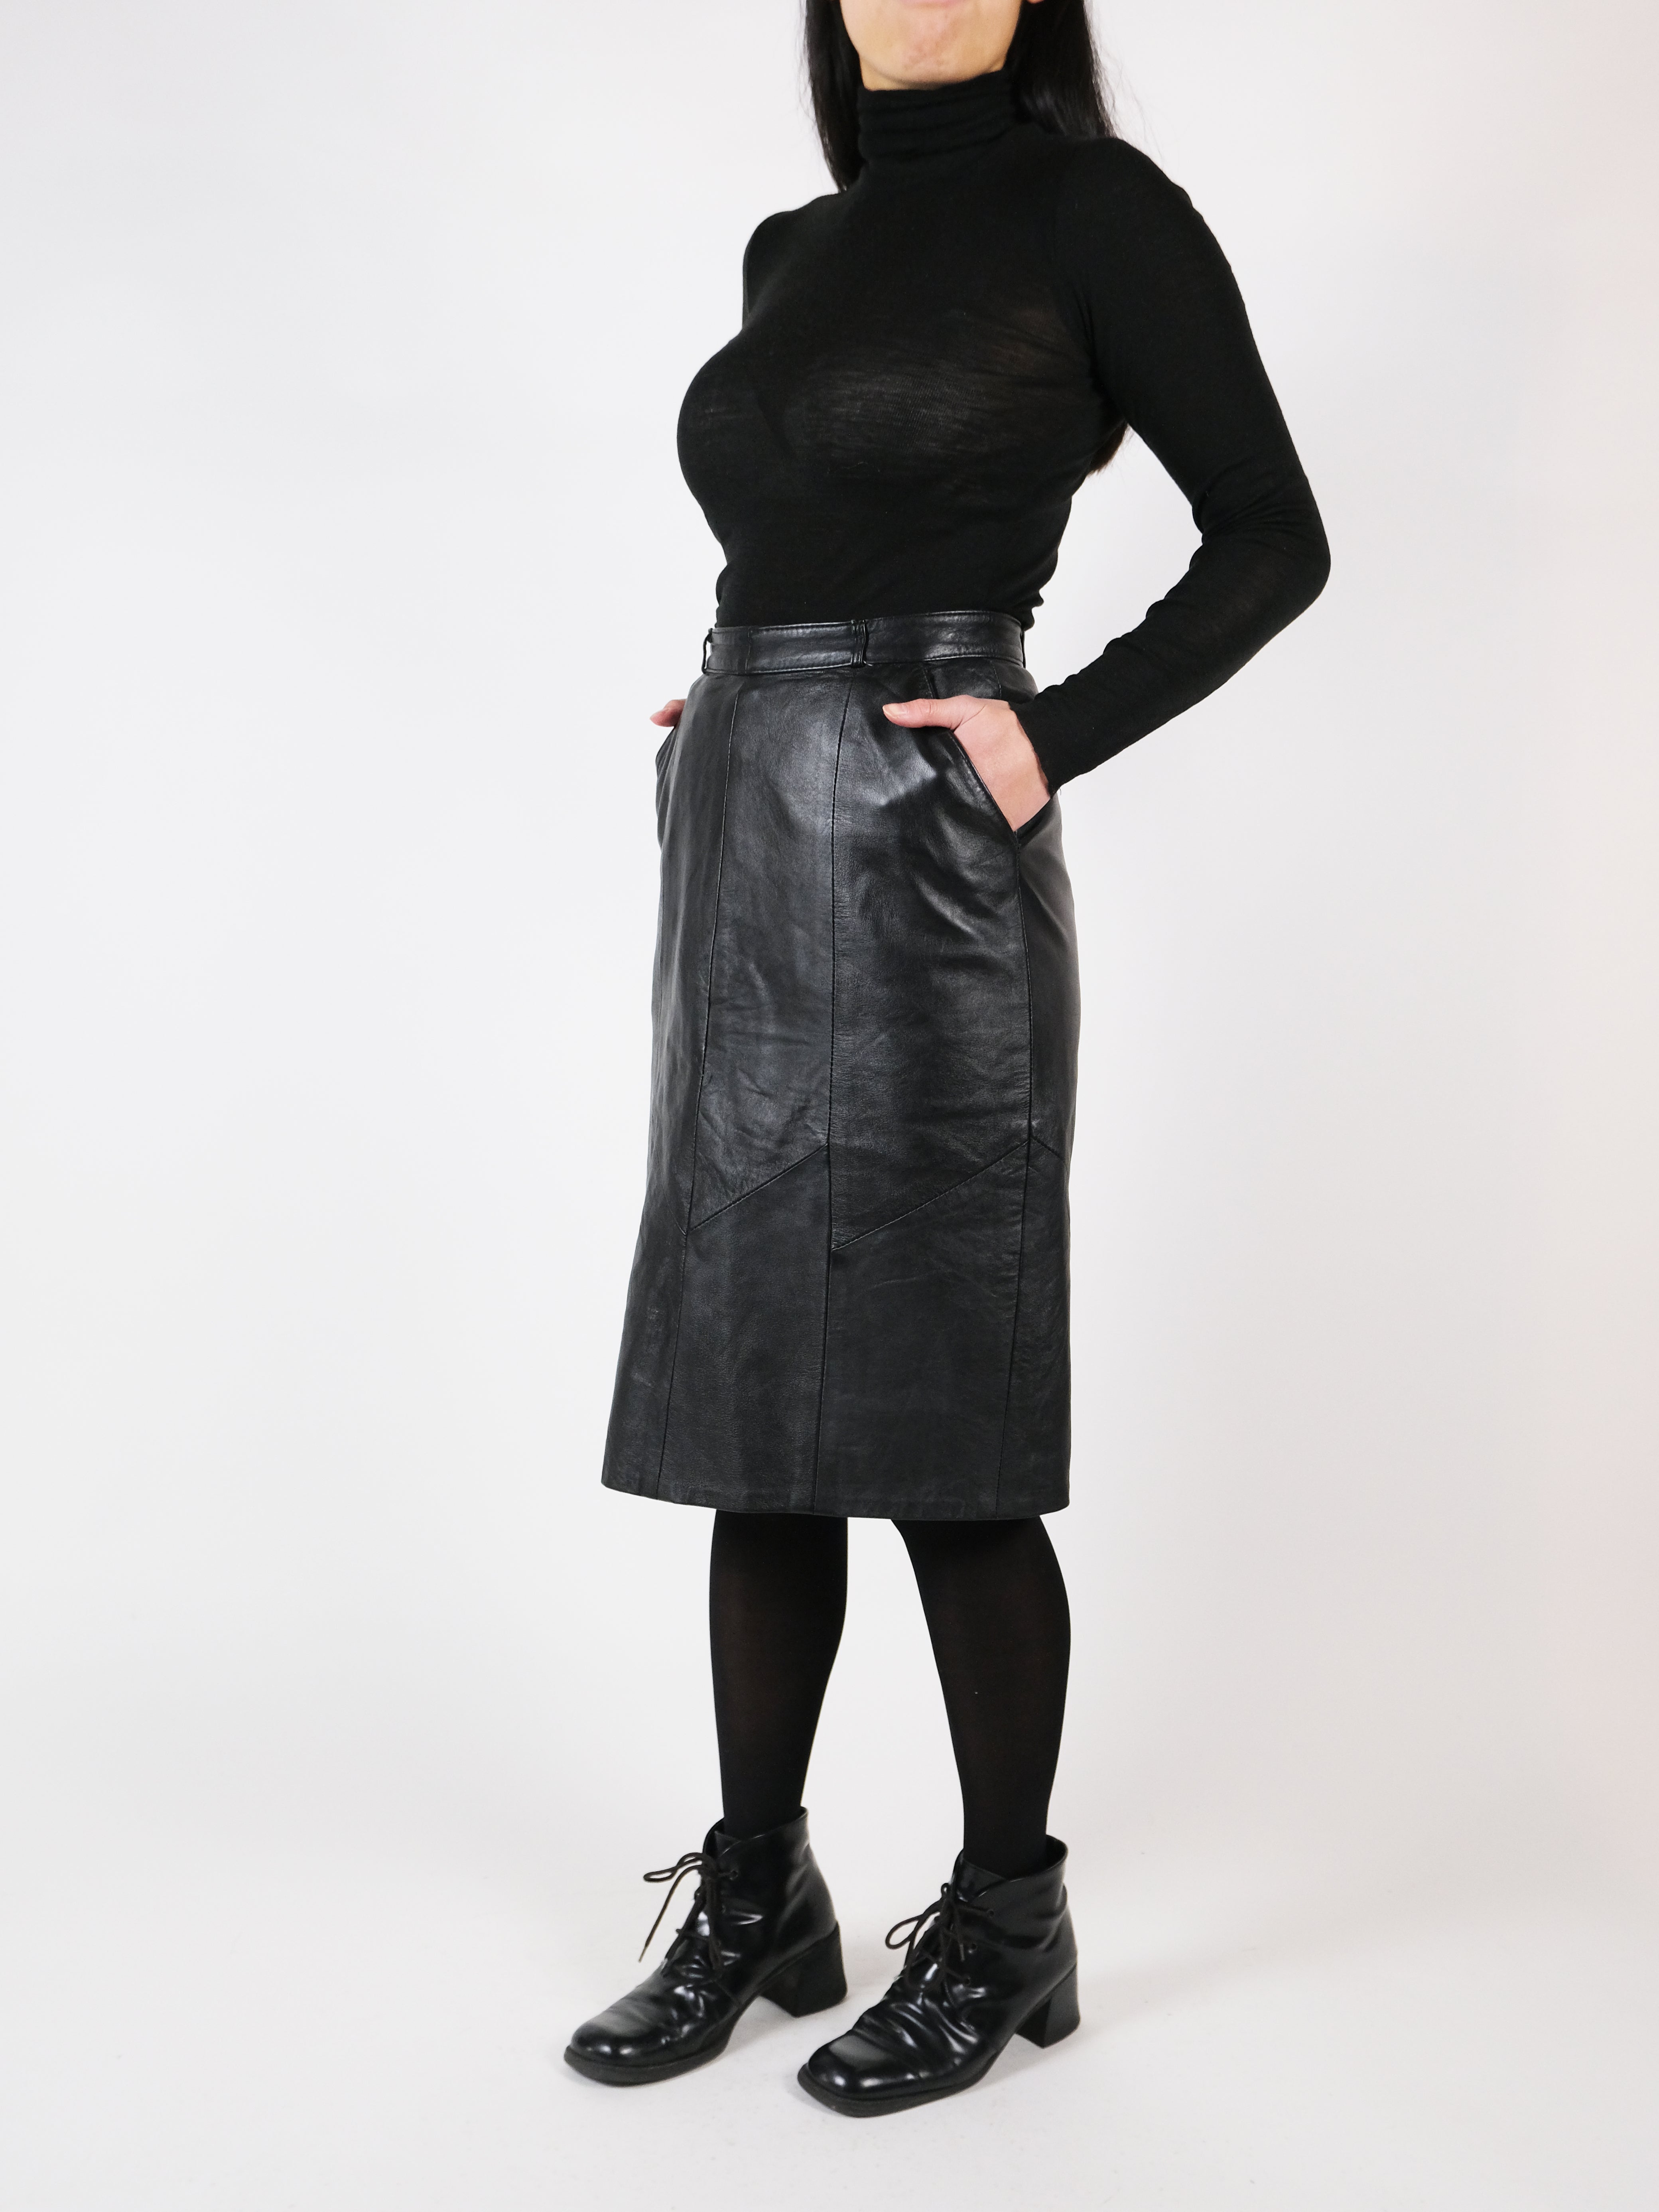 Leather skirt black